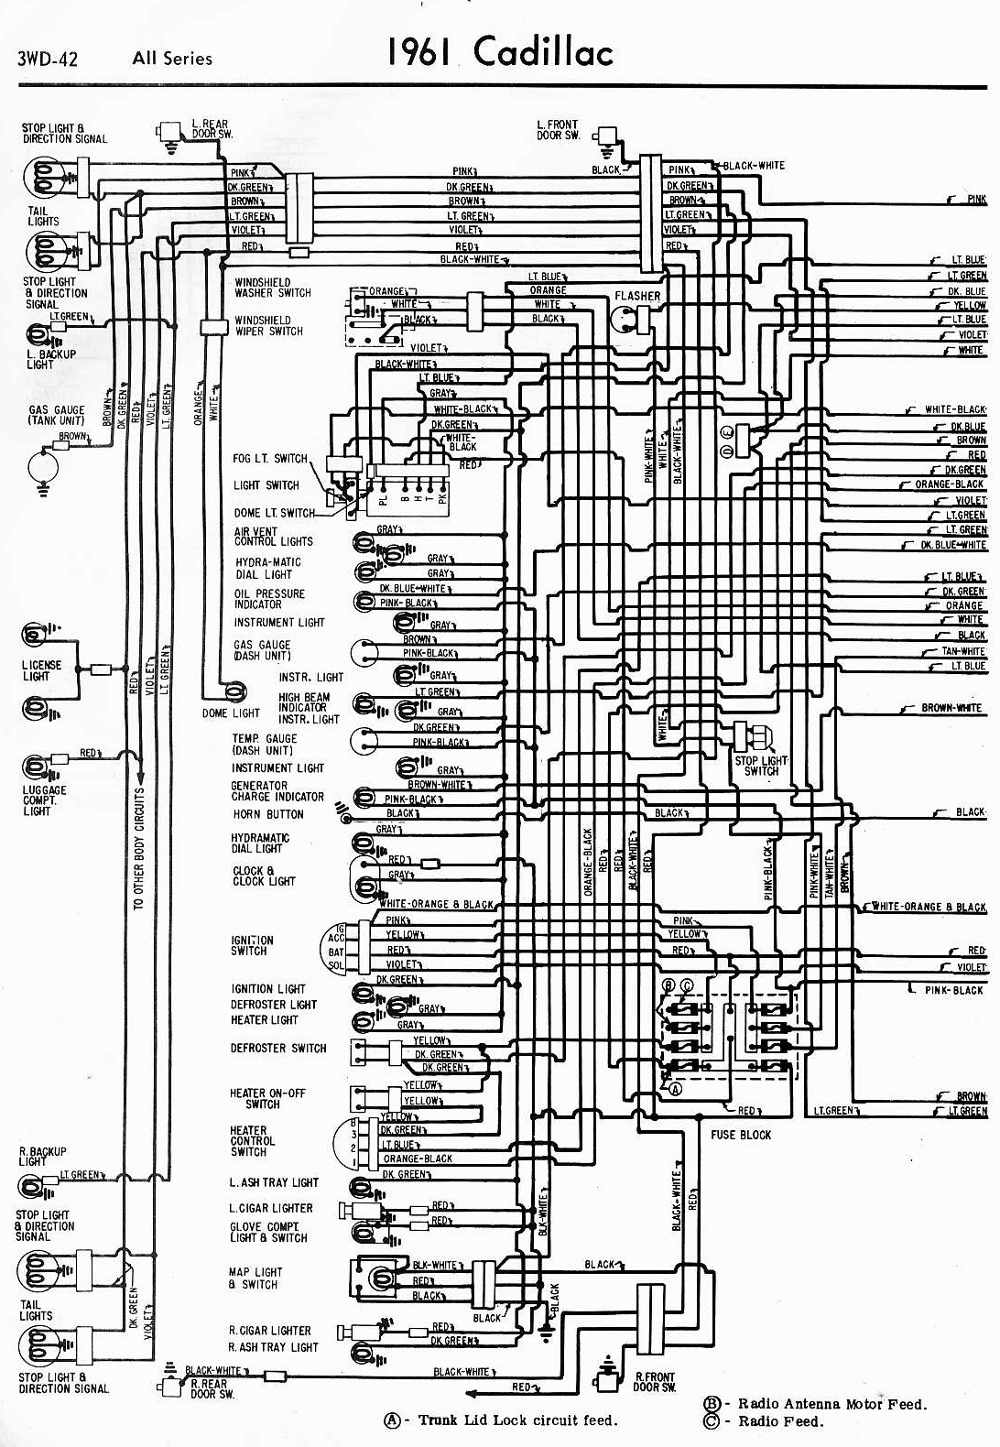 Wiring Diagrams Schematics 1961 Cadillac All Series Part 1